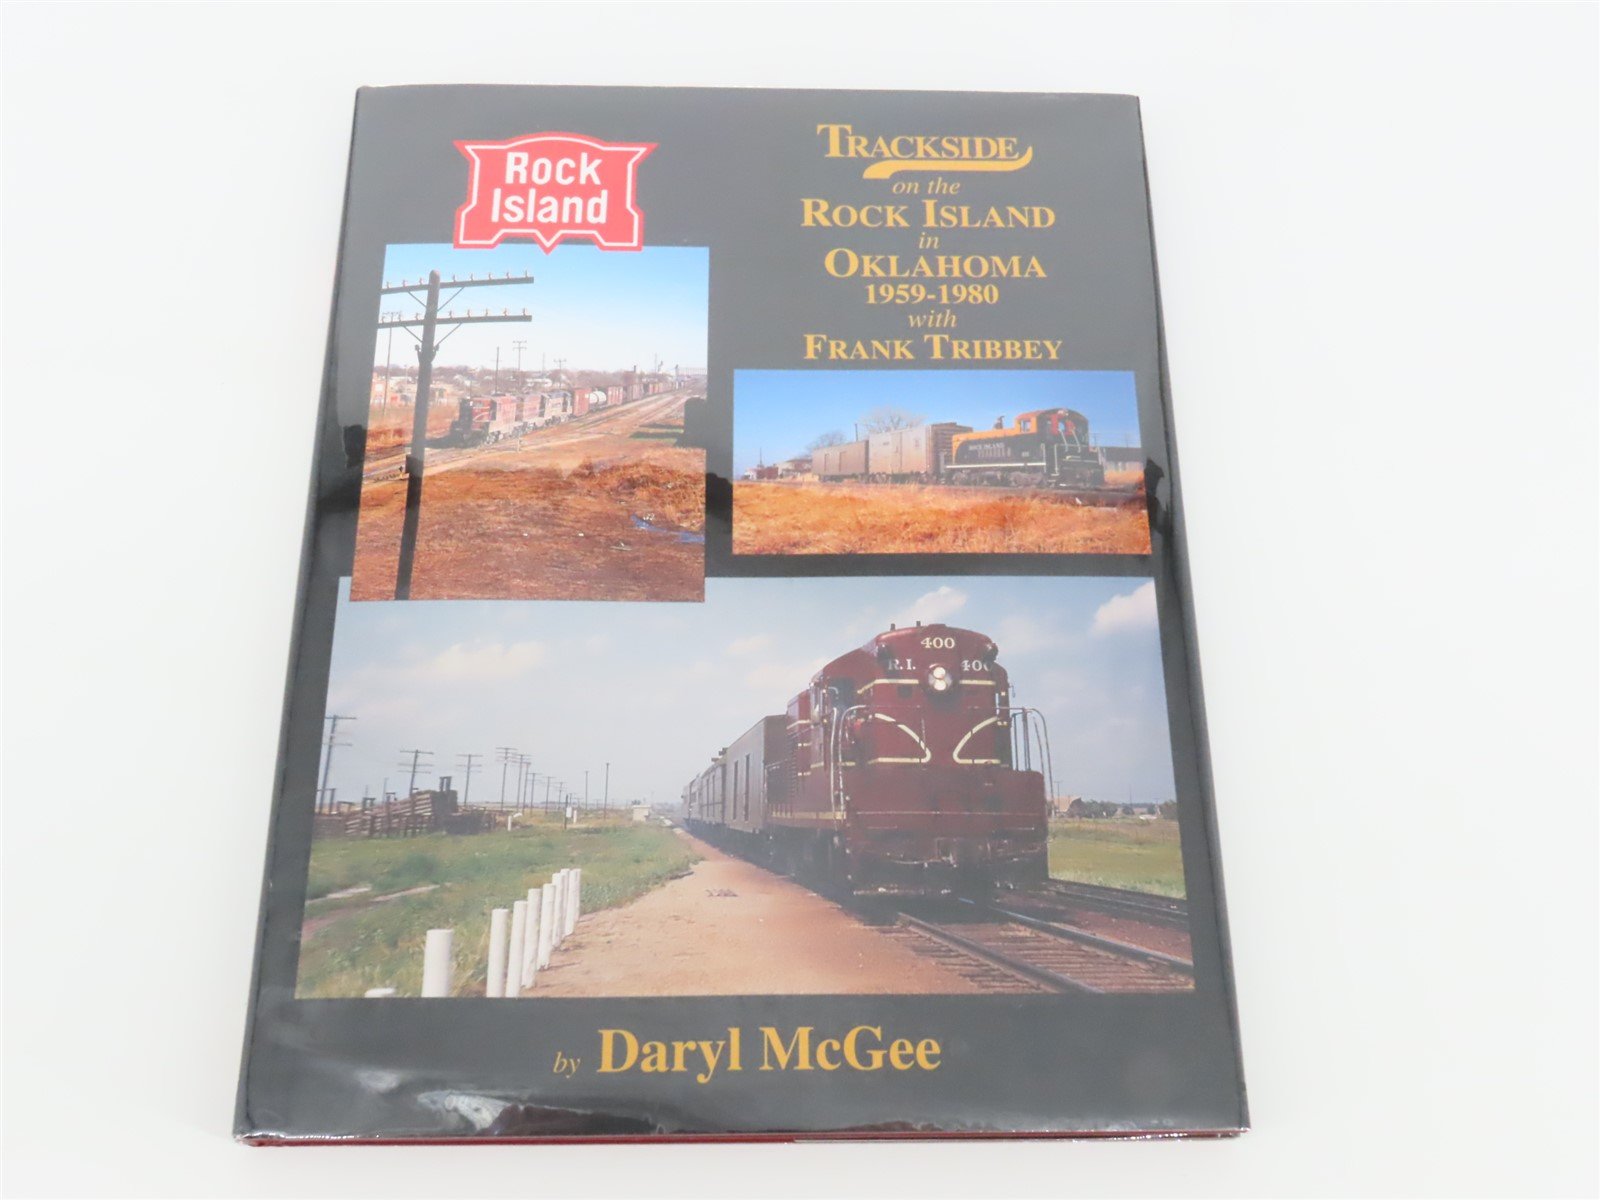 Morning Sun: Rock Island in Oklahoma 1959-1980 by Daryl McGee ©2012 HC Book